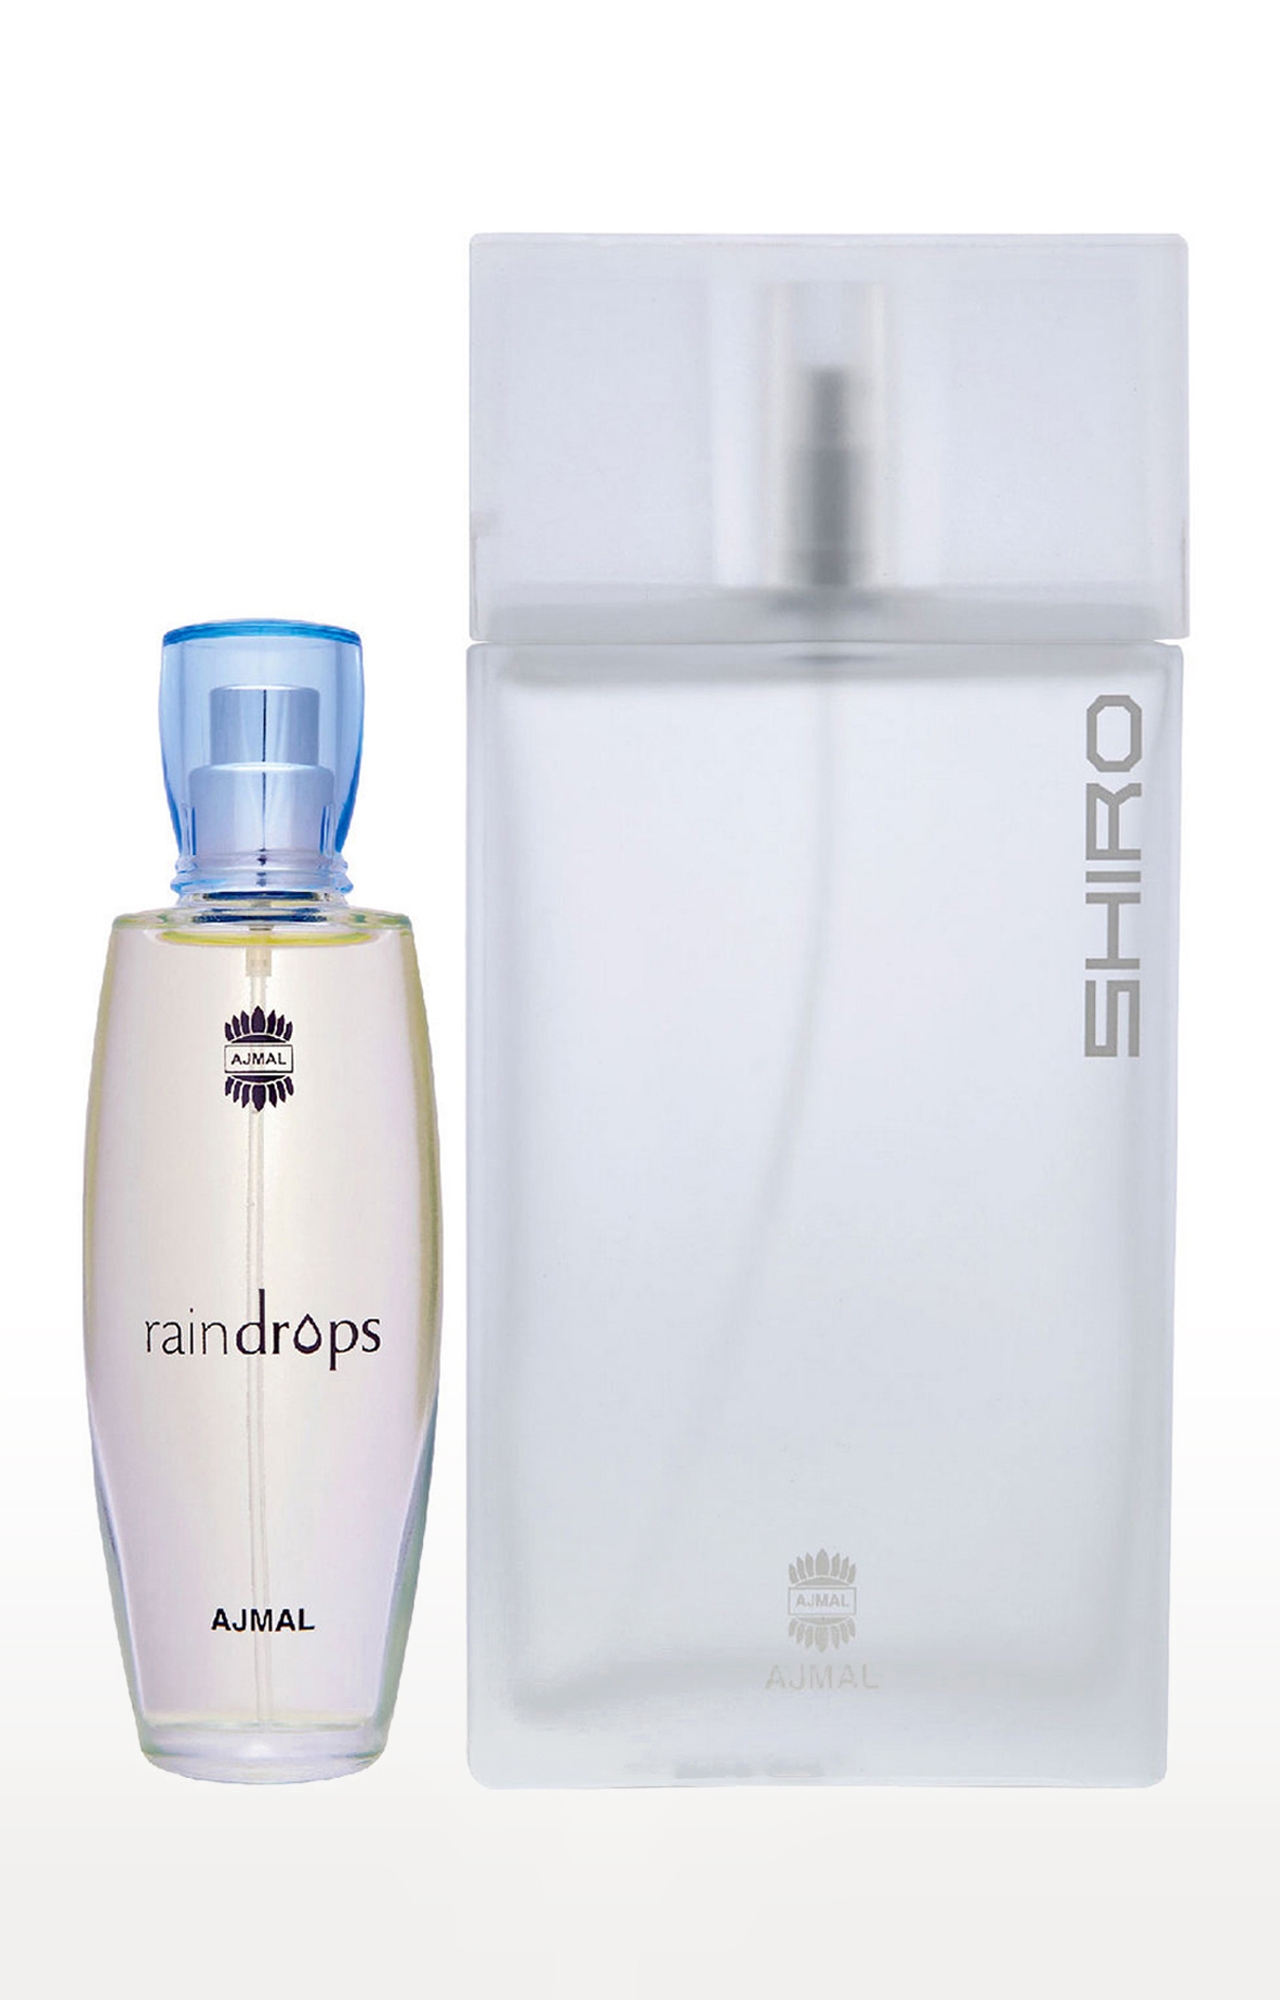 Ajmal Raindrops EDP Perfume 50ml for Women and Shiro EDP Perfume 90ml for Men